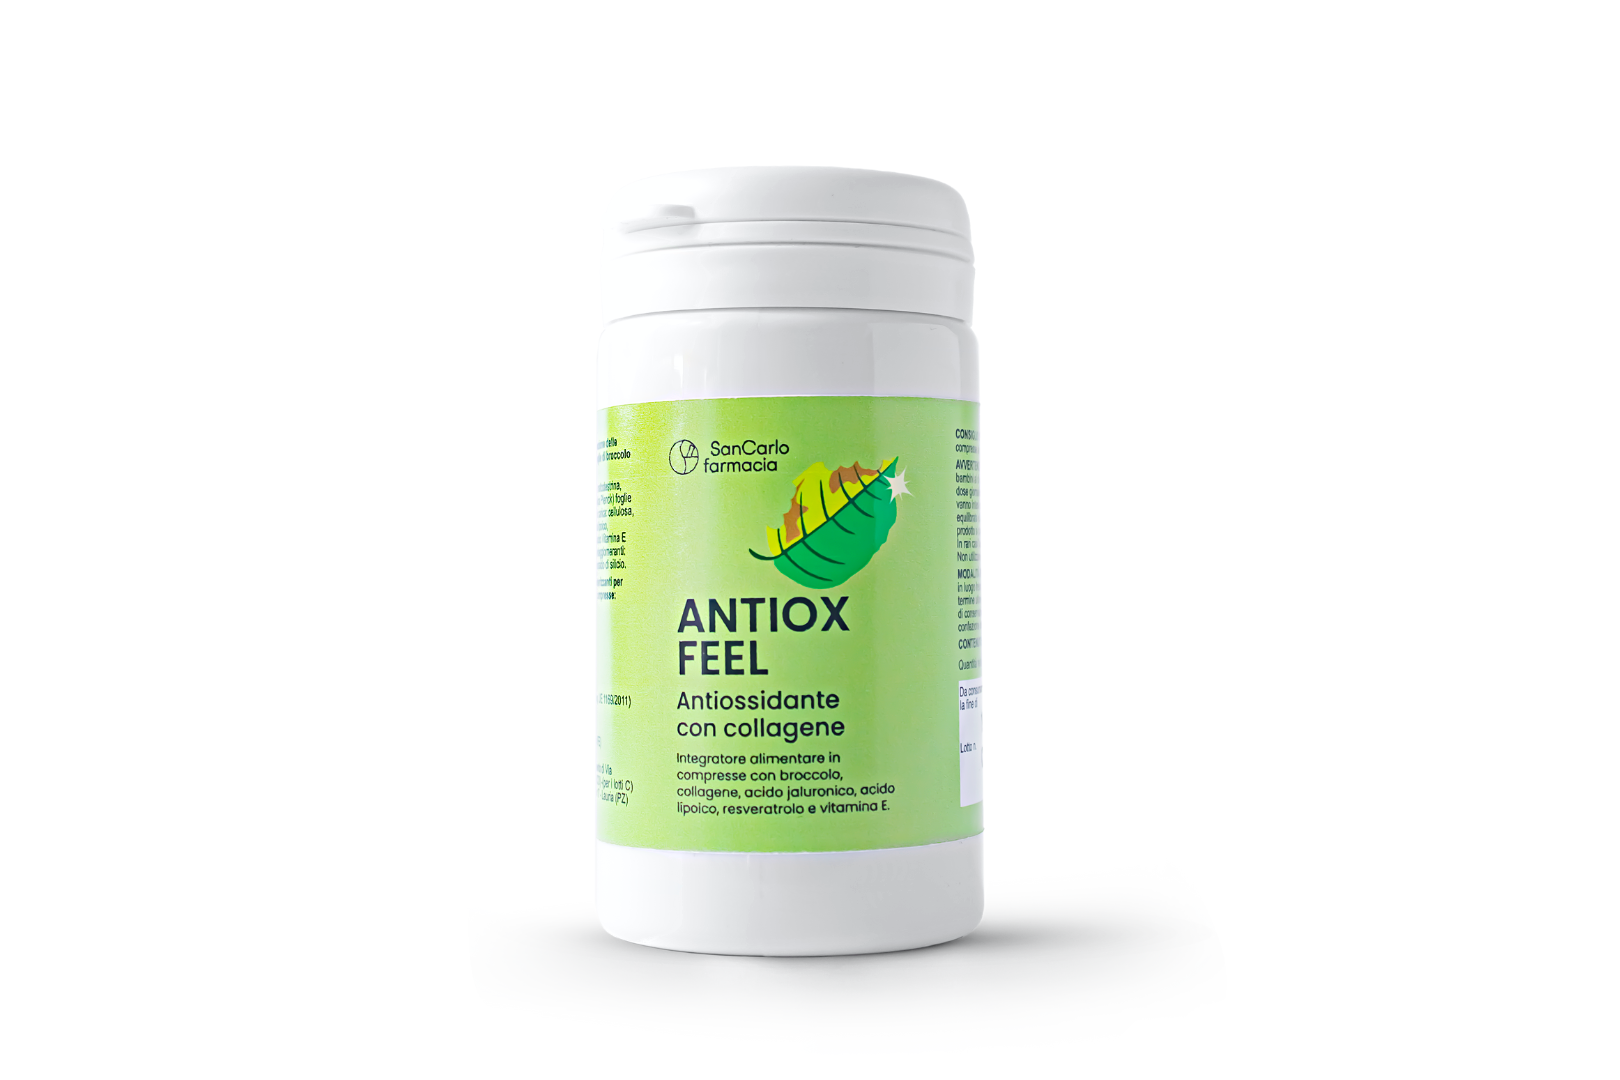 Antioxfeel integratore antiossidante antiage